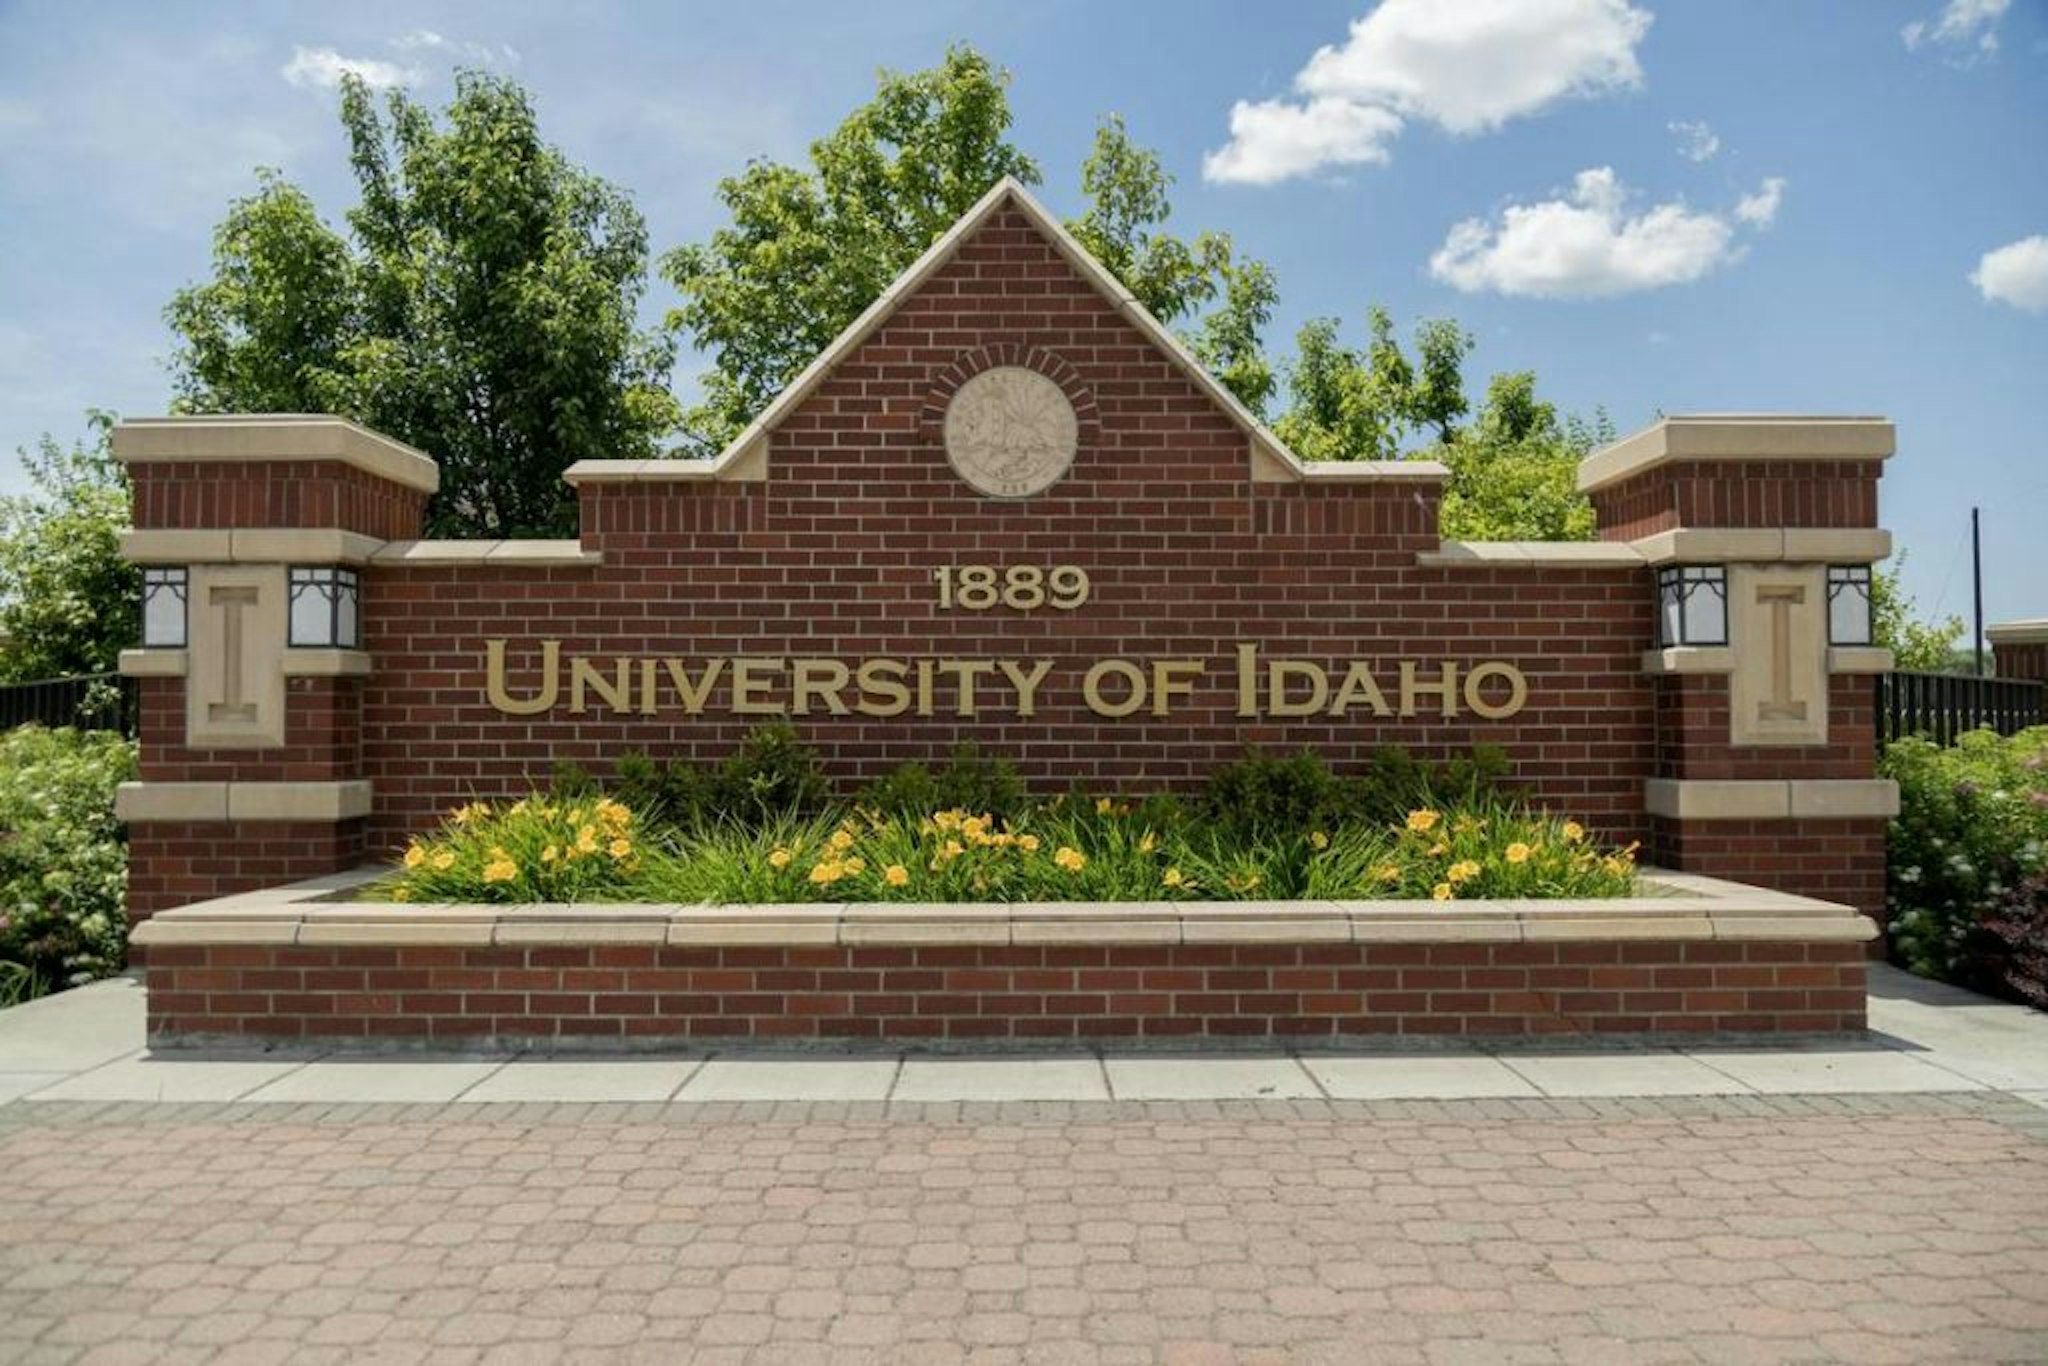 University of Idaho sign